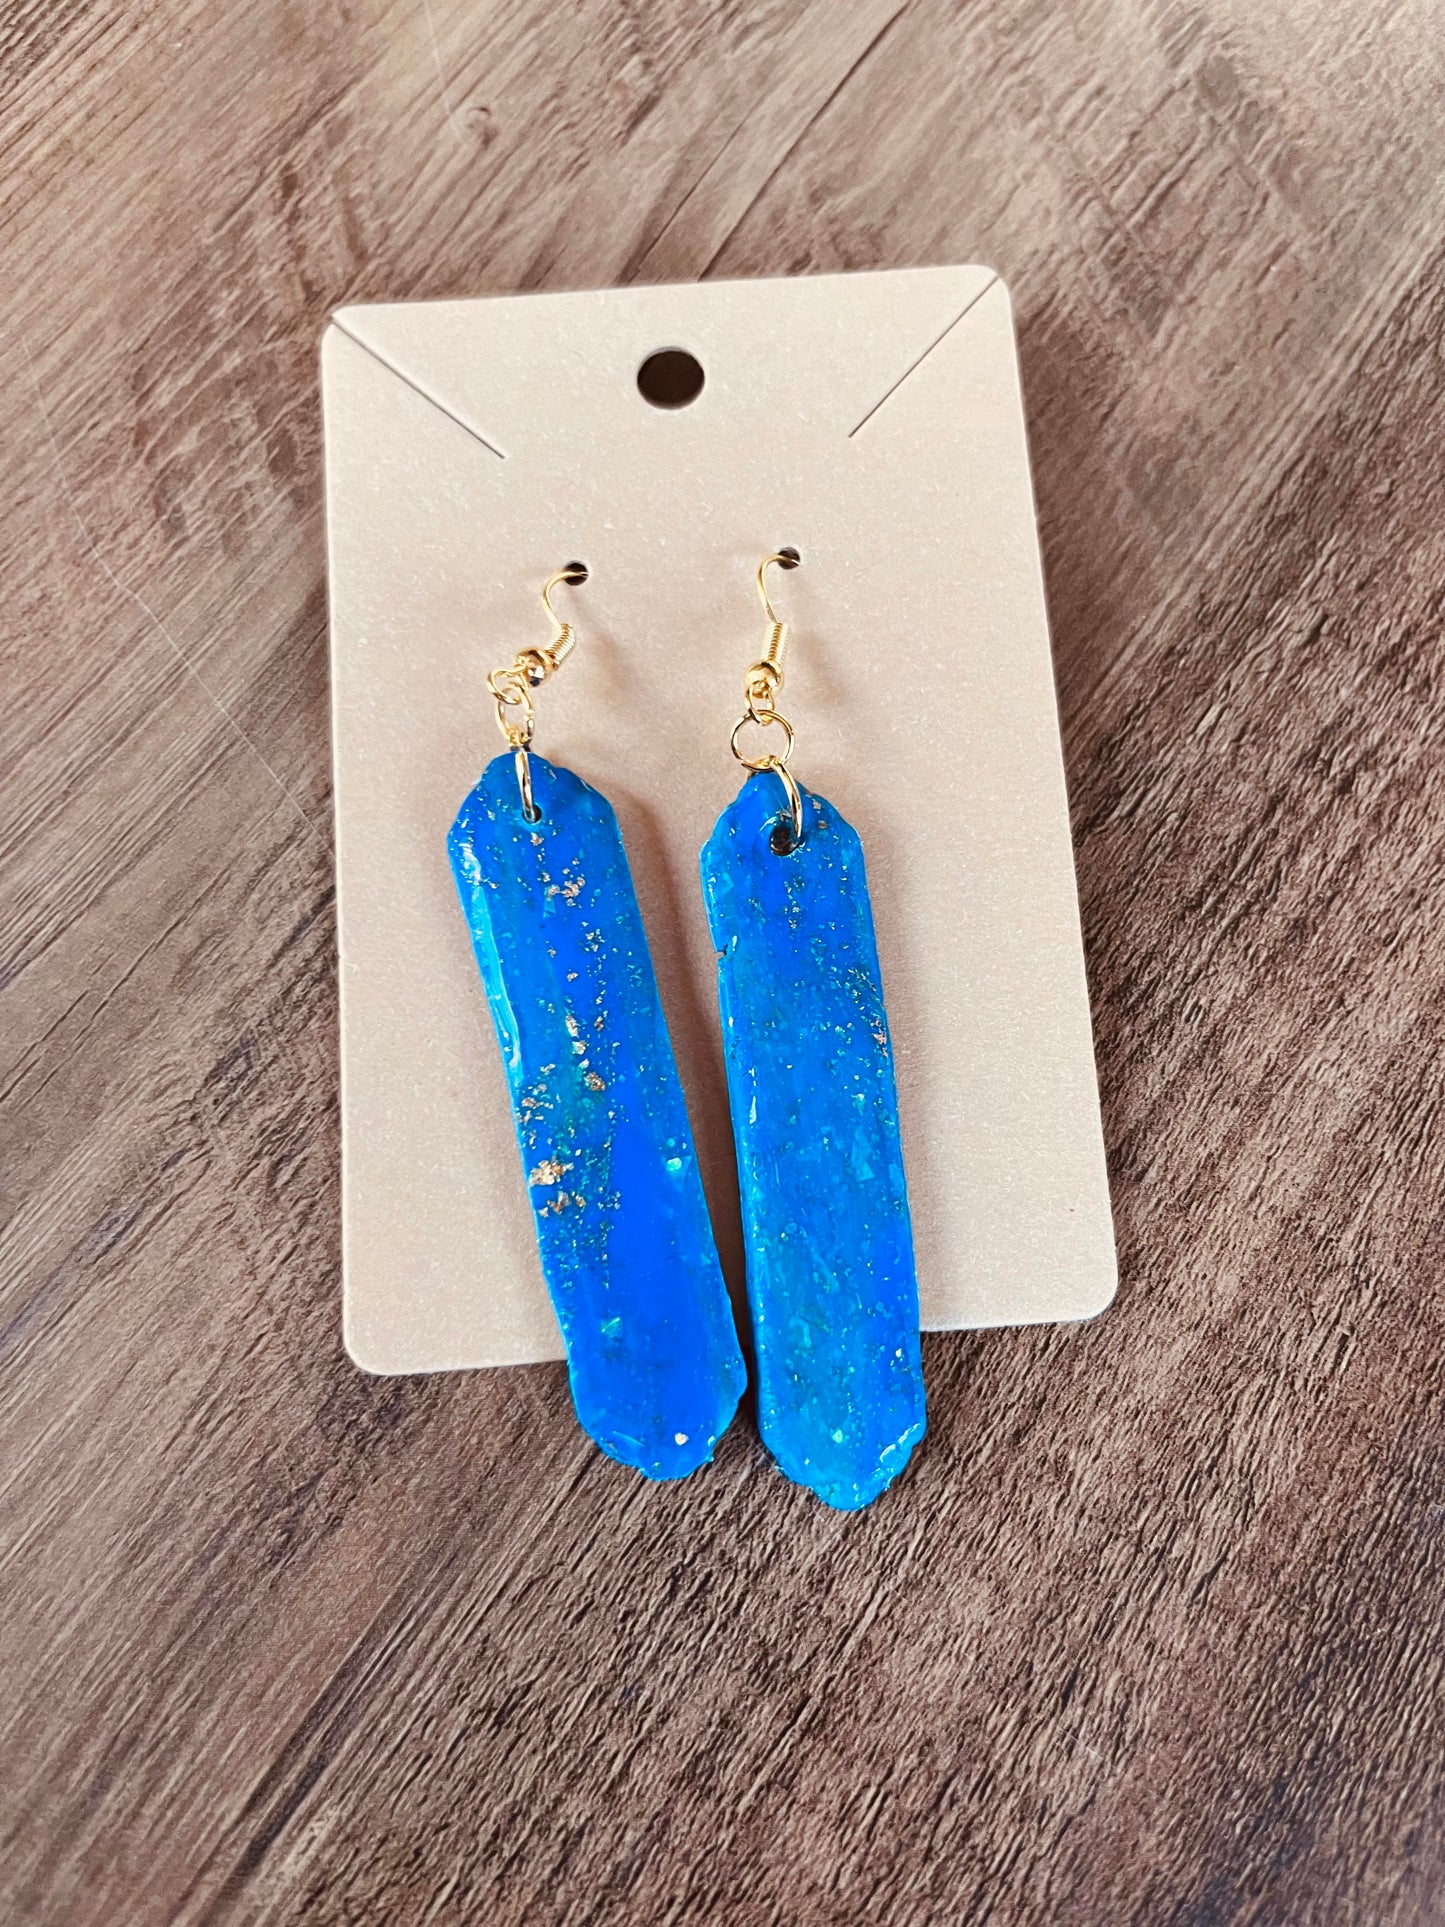 Clay Earrings in "Ocean Shimmer" Design